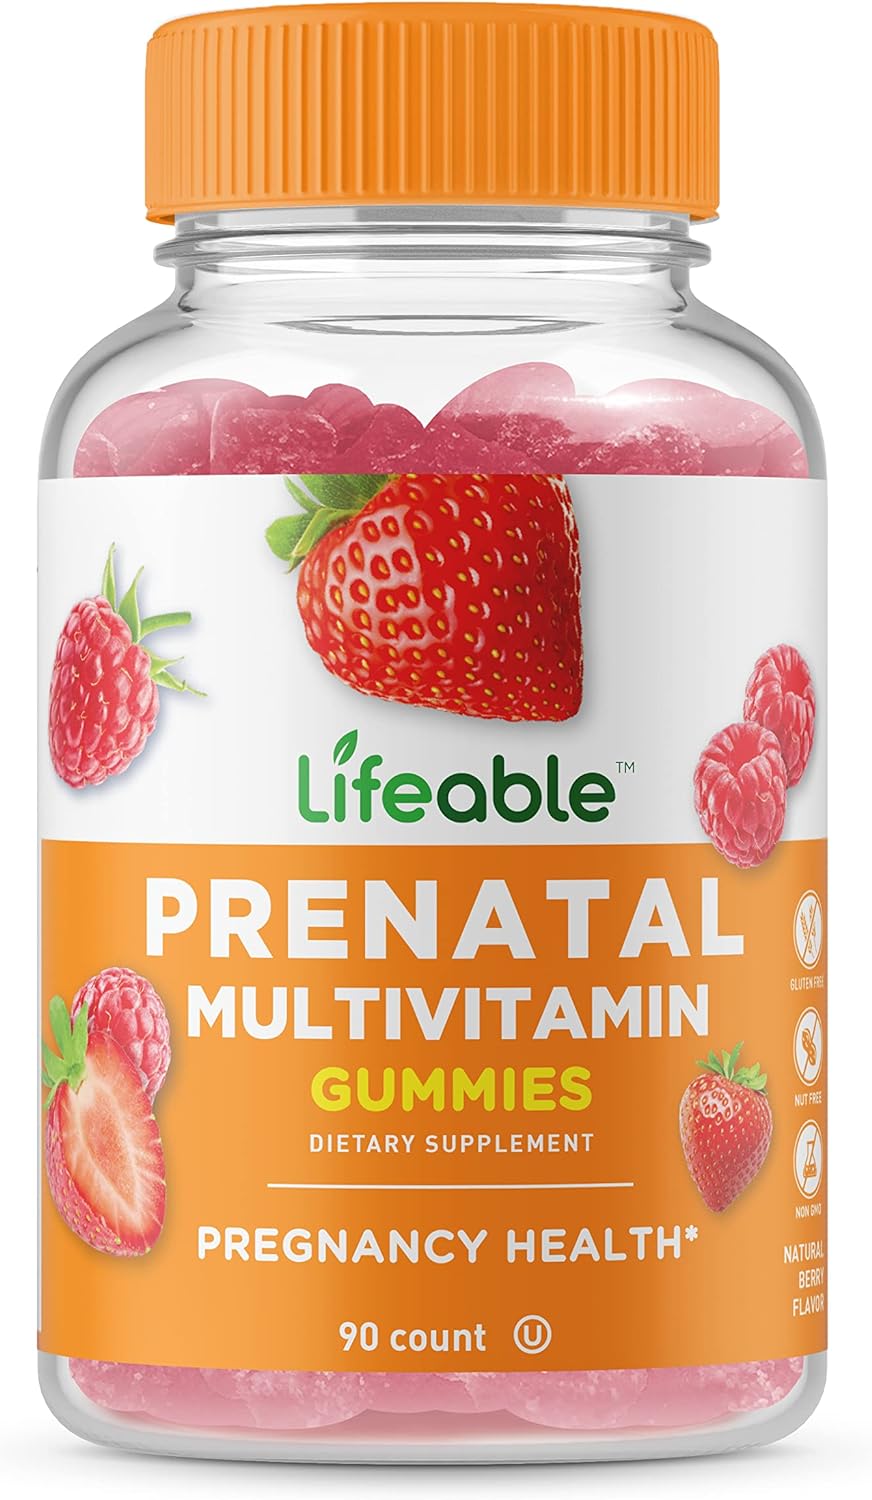 Lifeable Prenatal Multivitamin - Great Tasting Natural Flavor Gummy - Vegetarian Vitamin Supplement - with Vitamins A, C, D, E, Niacin, B6, Folate, B12, Biotin, Iron, Iodine, Zinc - 90 Gummies